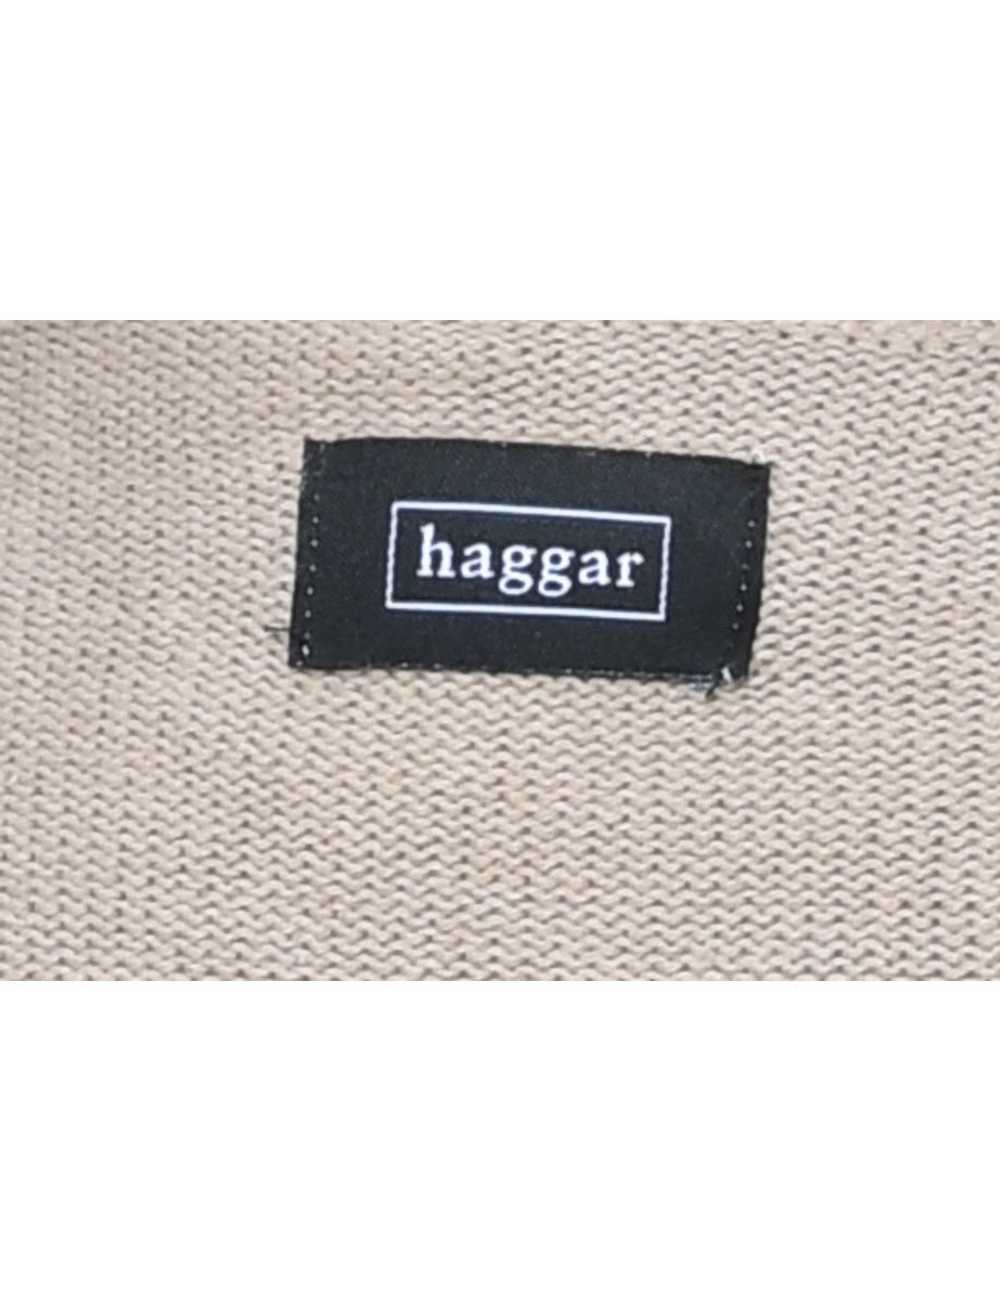 Haggar Checked Jumper - XL - image 4